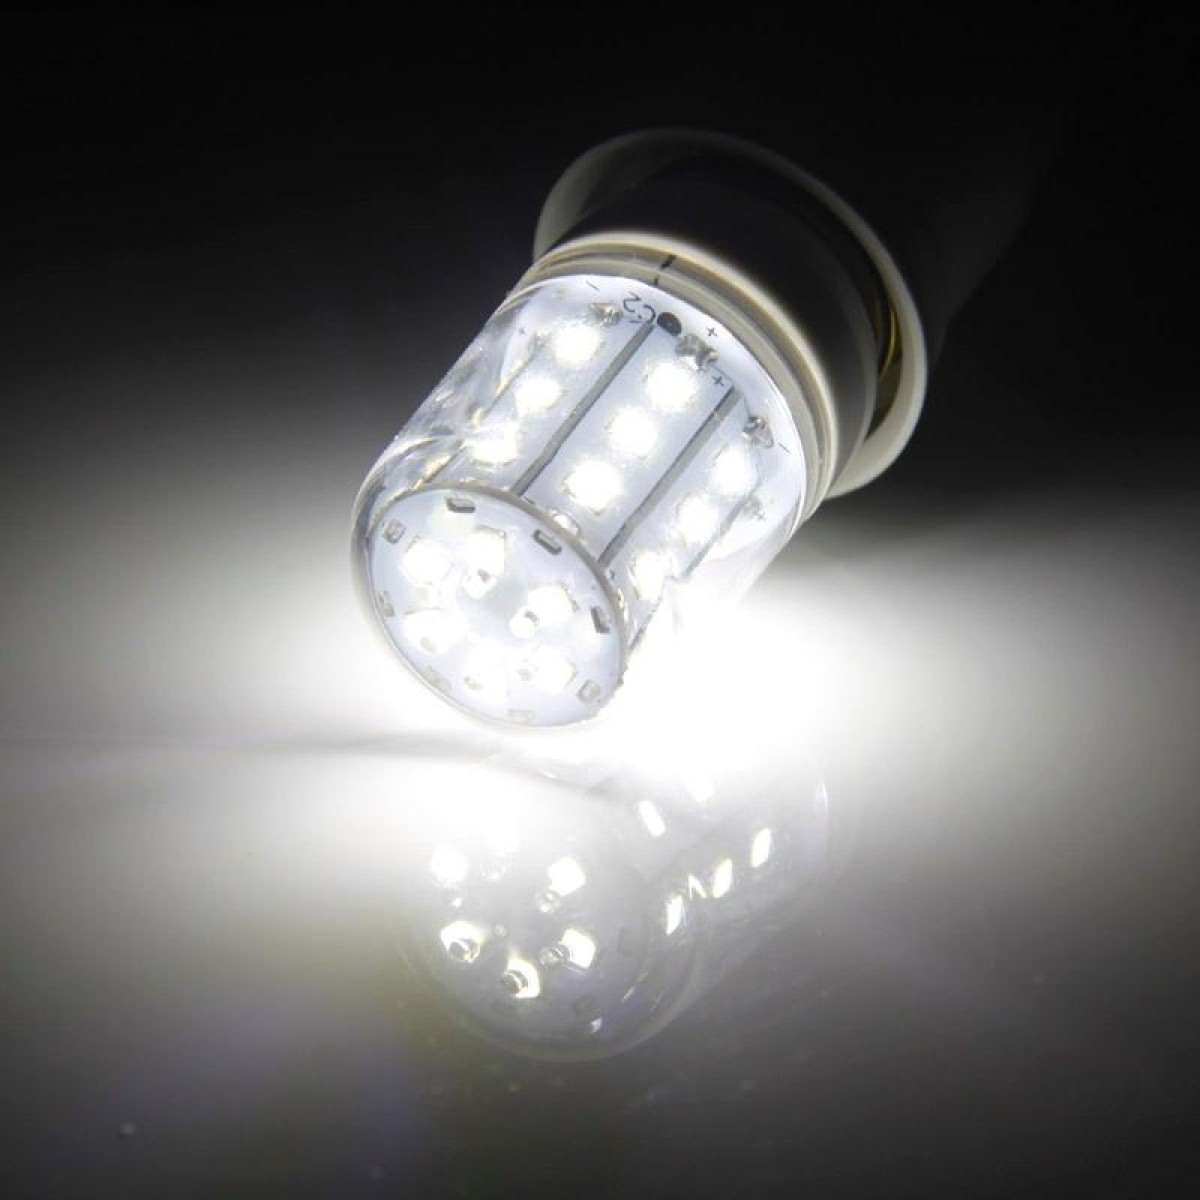 E27 4W 250LM Corn Light Lamp Bulb, 30 LED SMD 2835, White Light, AC 220-240V